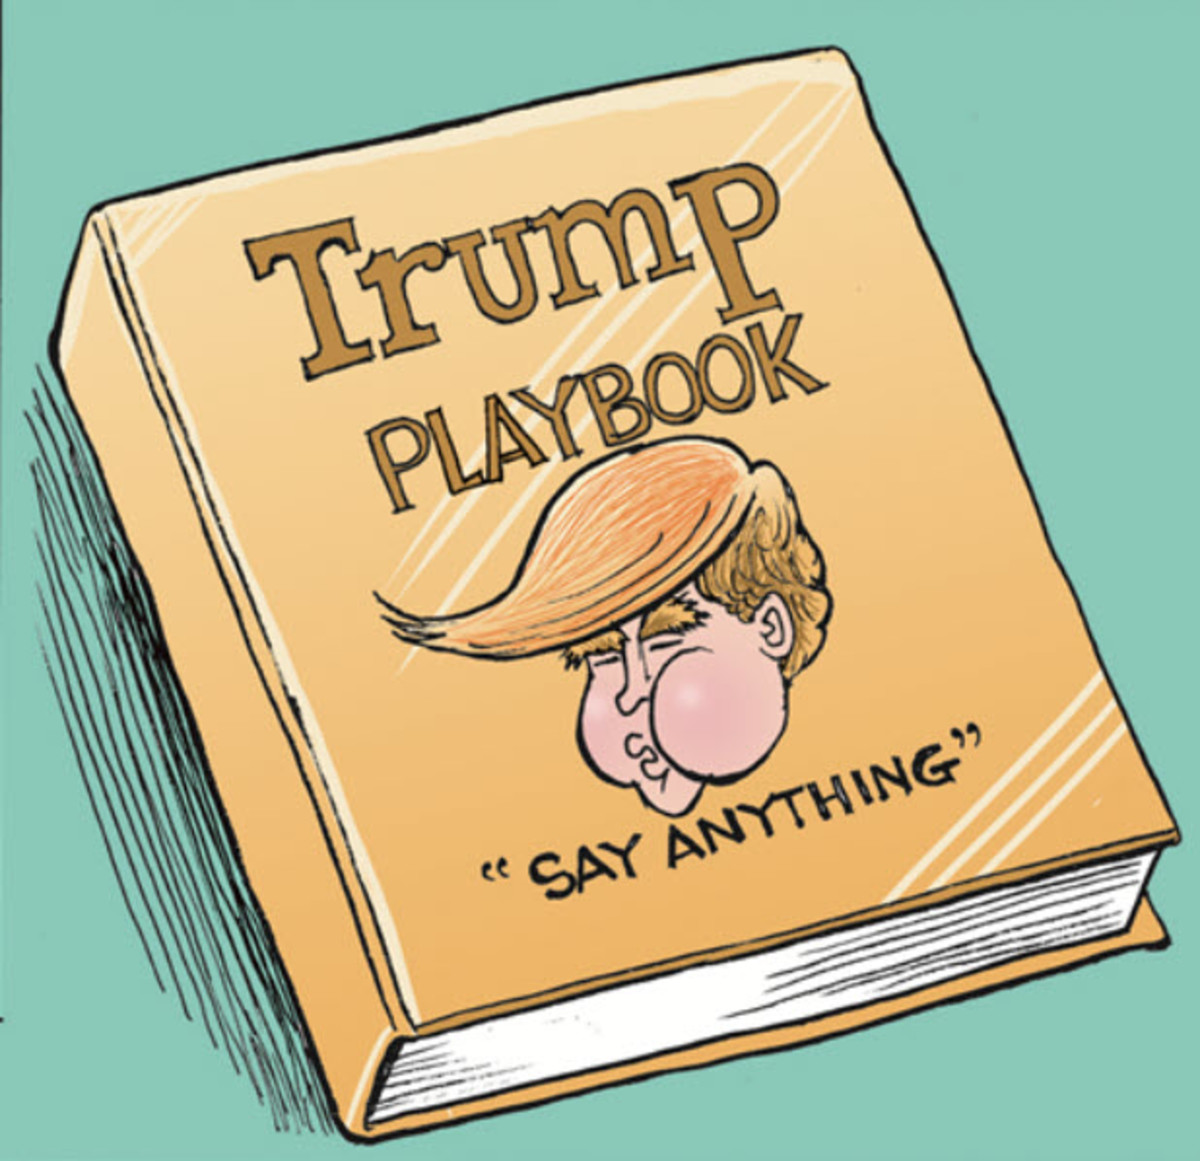 exposing-trumps-playbook